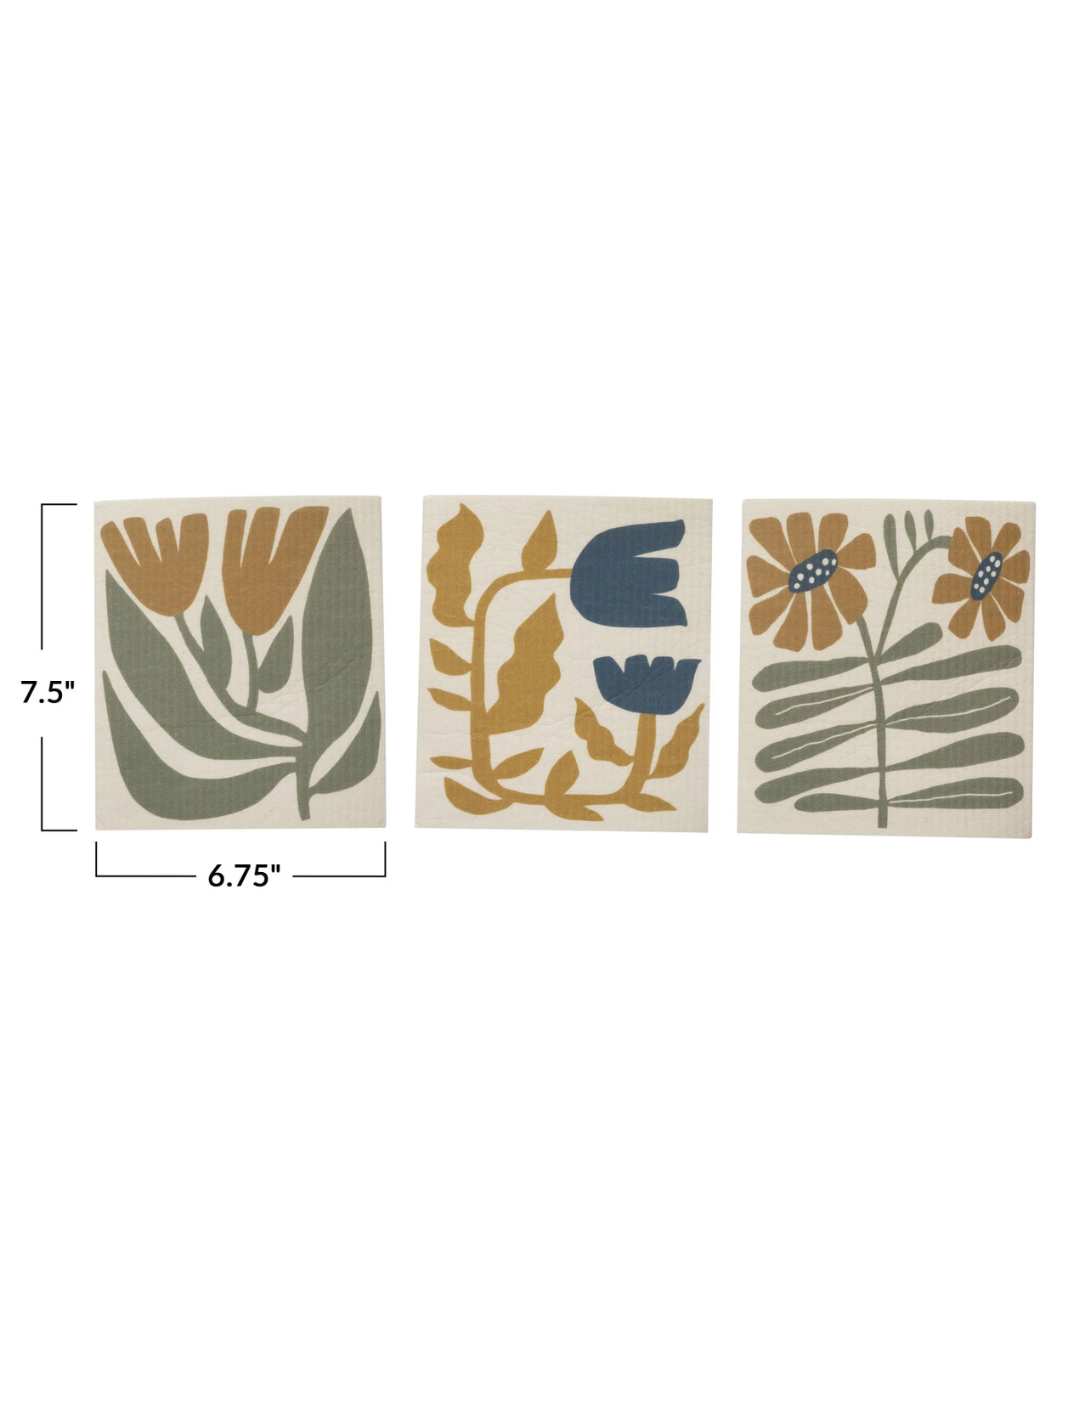 Reusable Cellulose Sponge Cloth w/ Flowers, 3 Styles